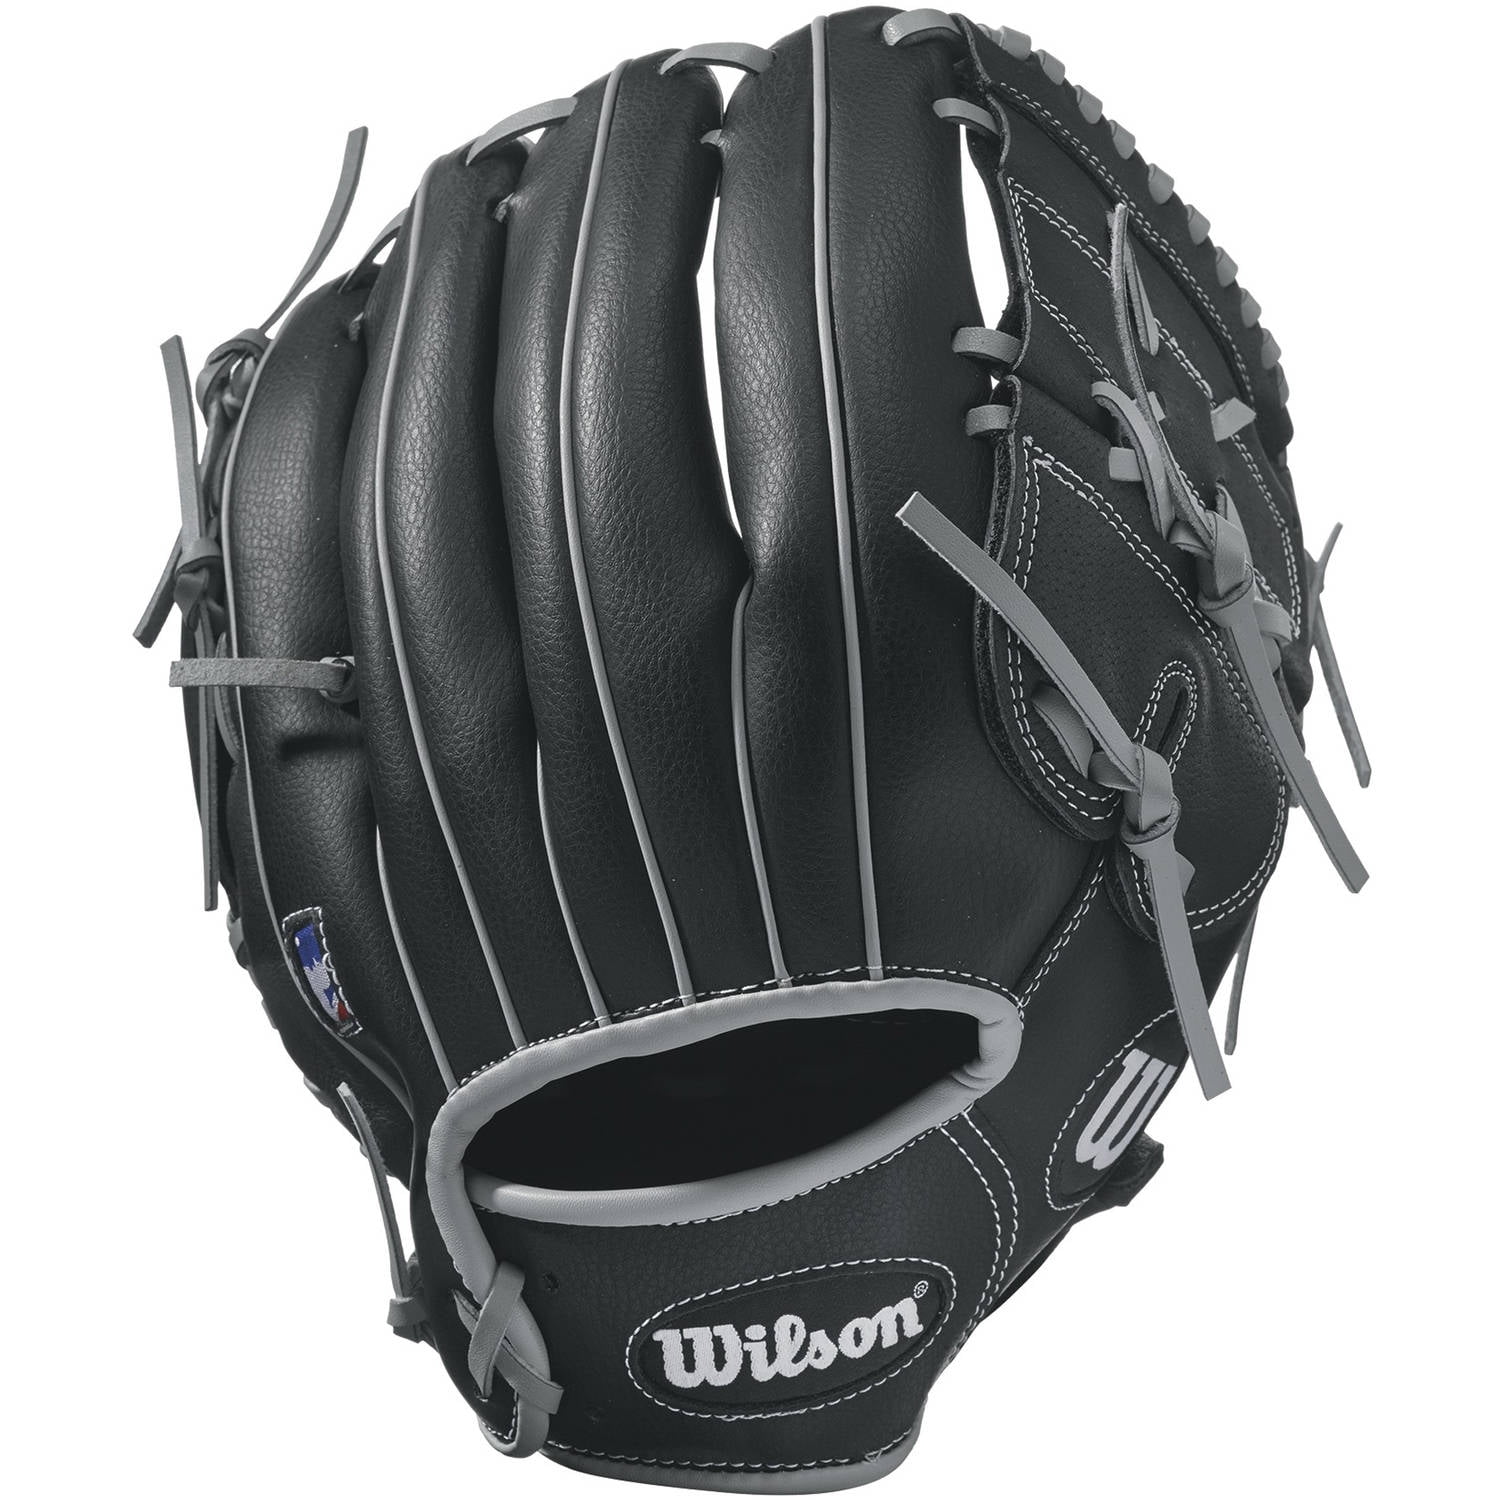 Wilson A360 Series Baseball Gloves